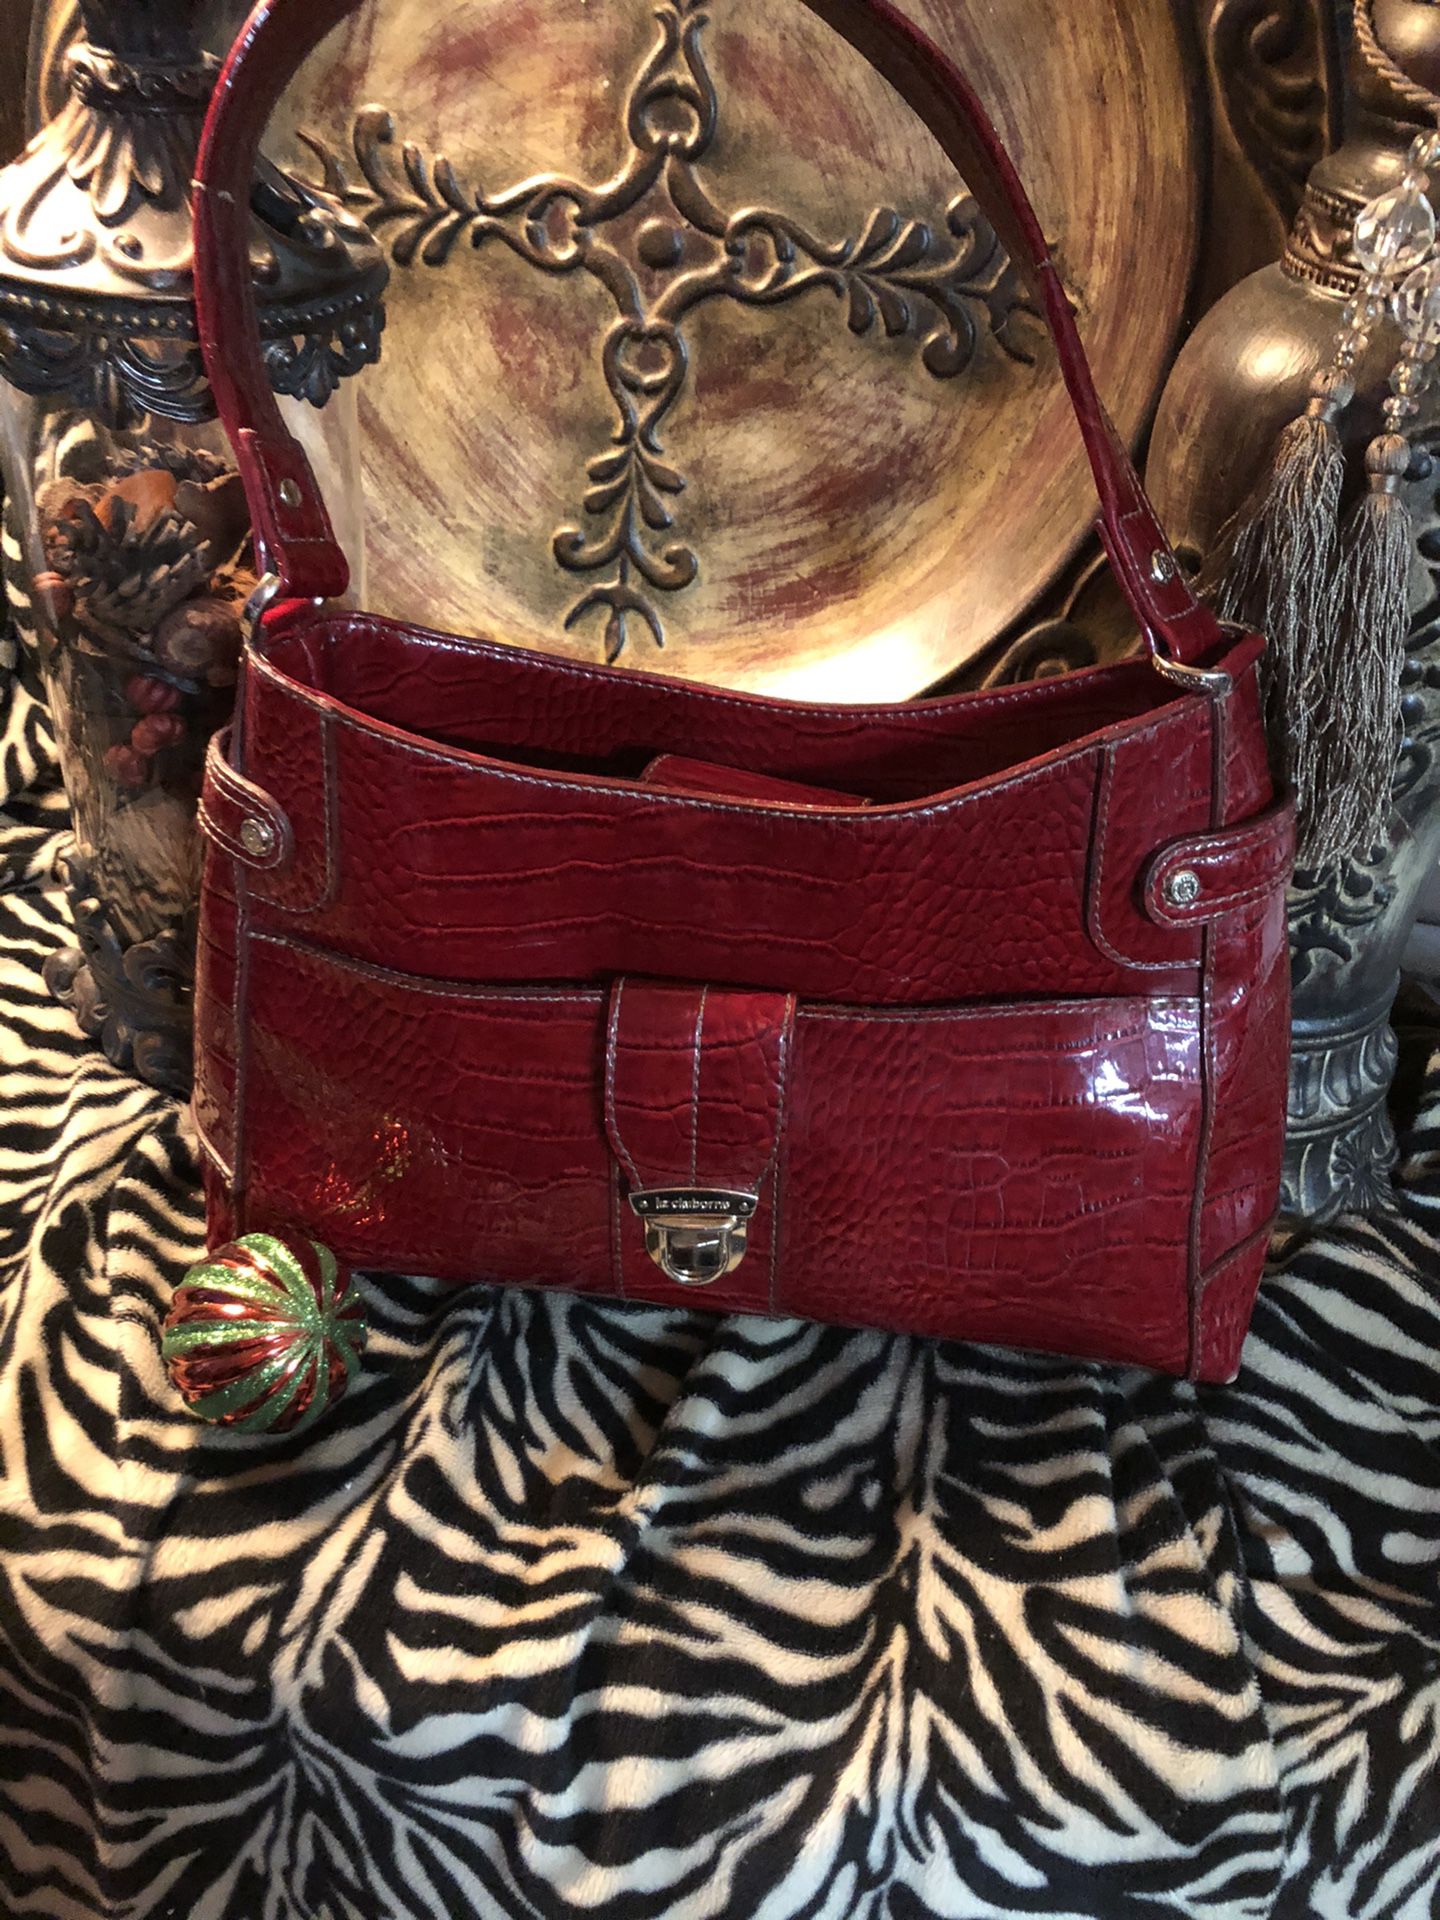 Liz Claiborne purse for Sale in Sunnyvale, CA - OfferUp